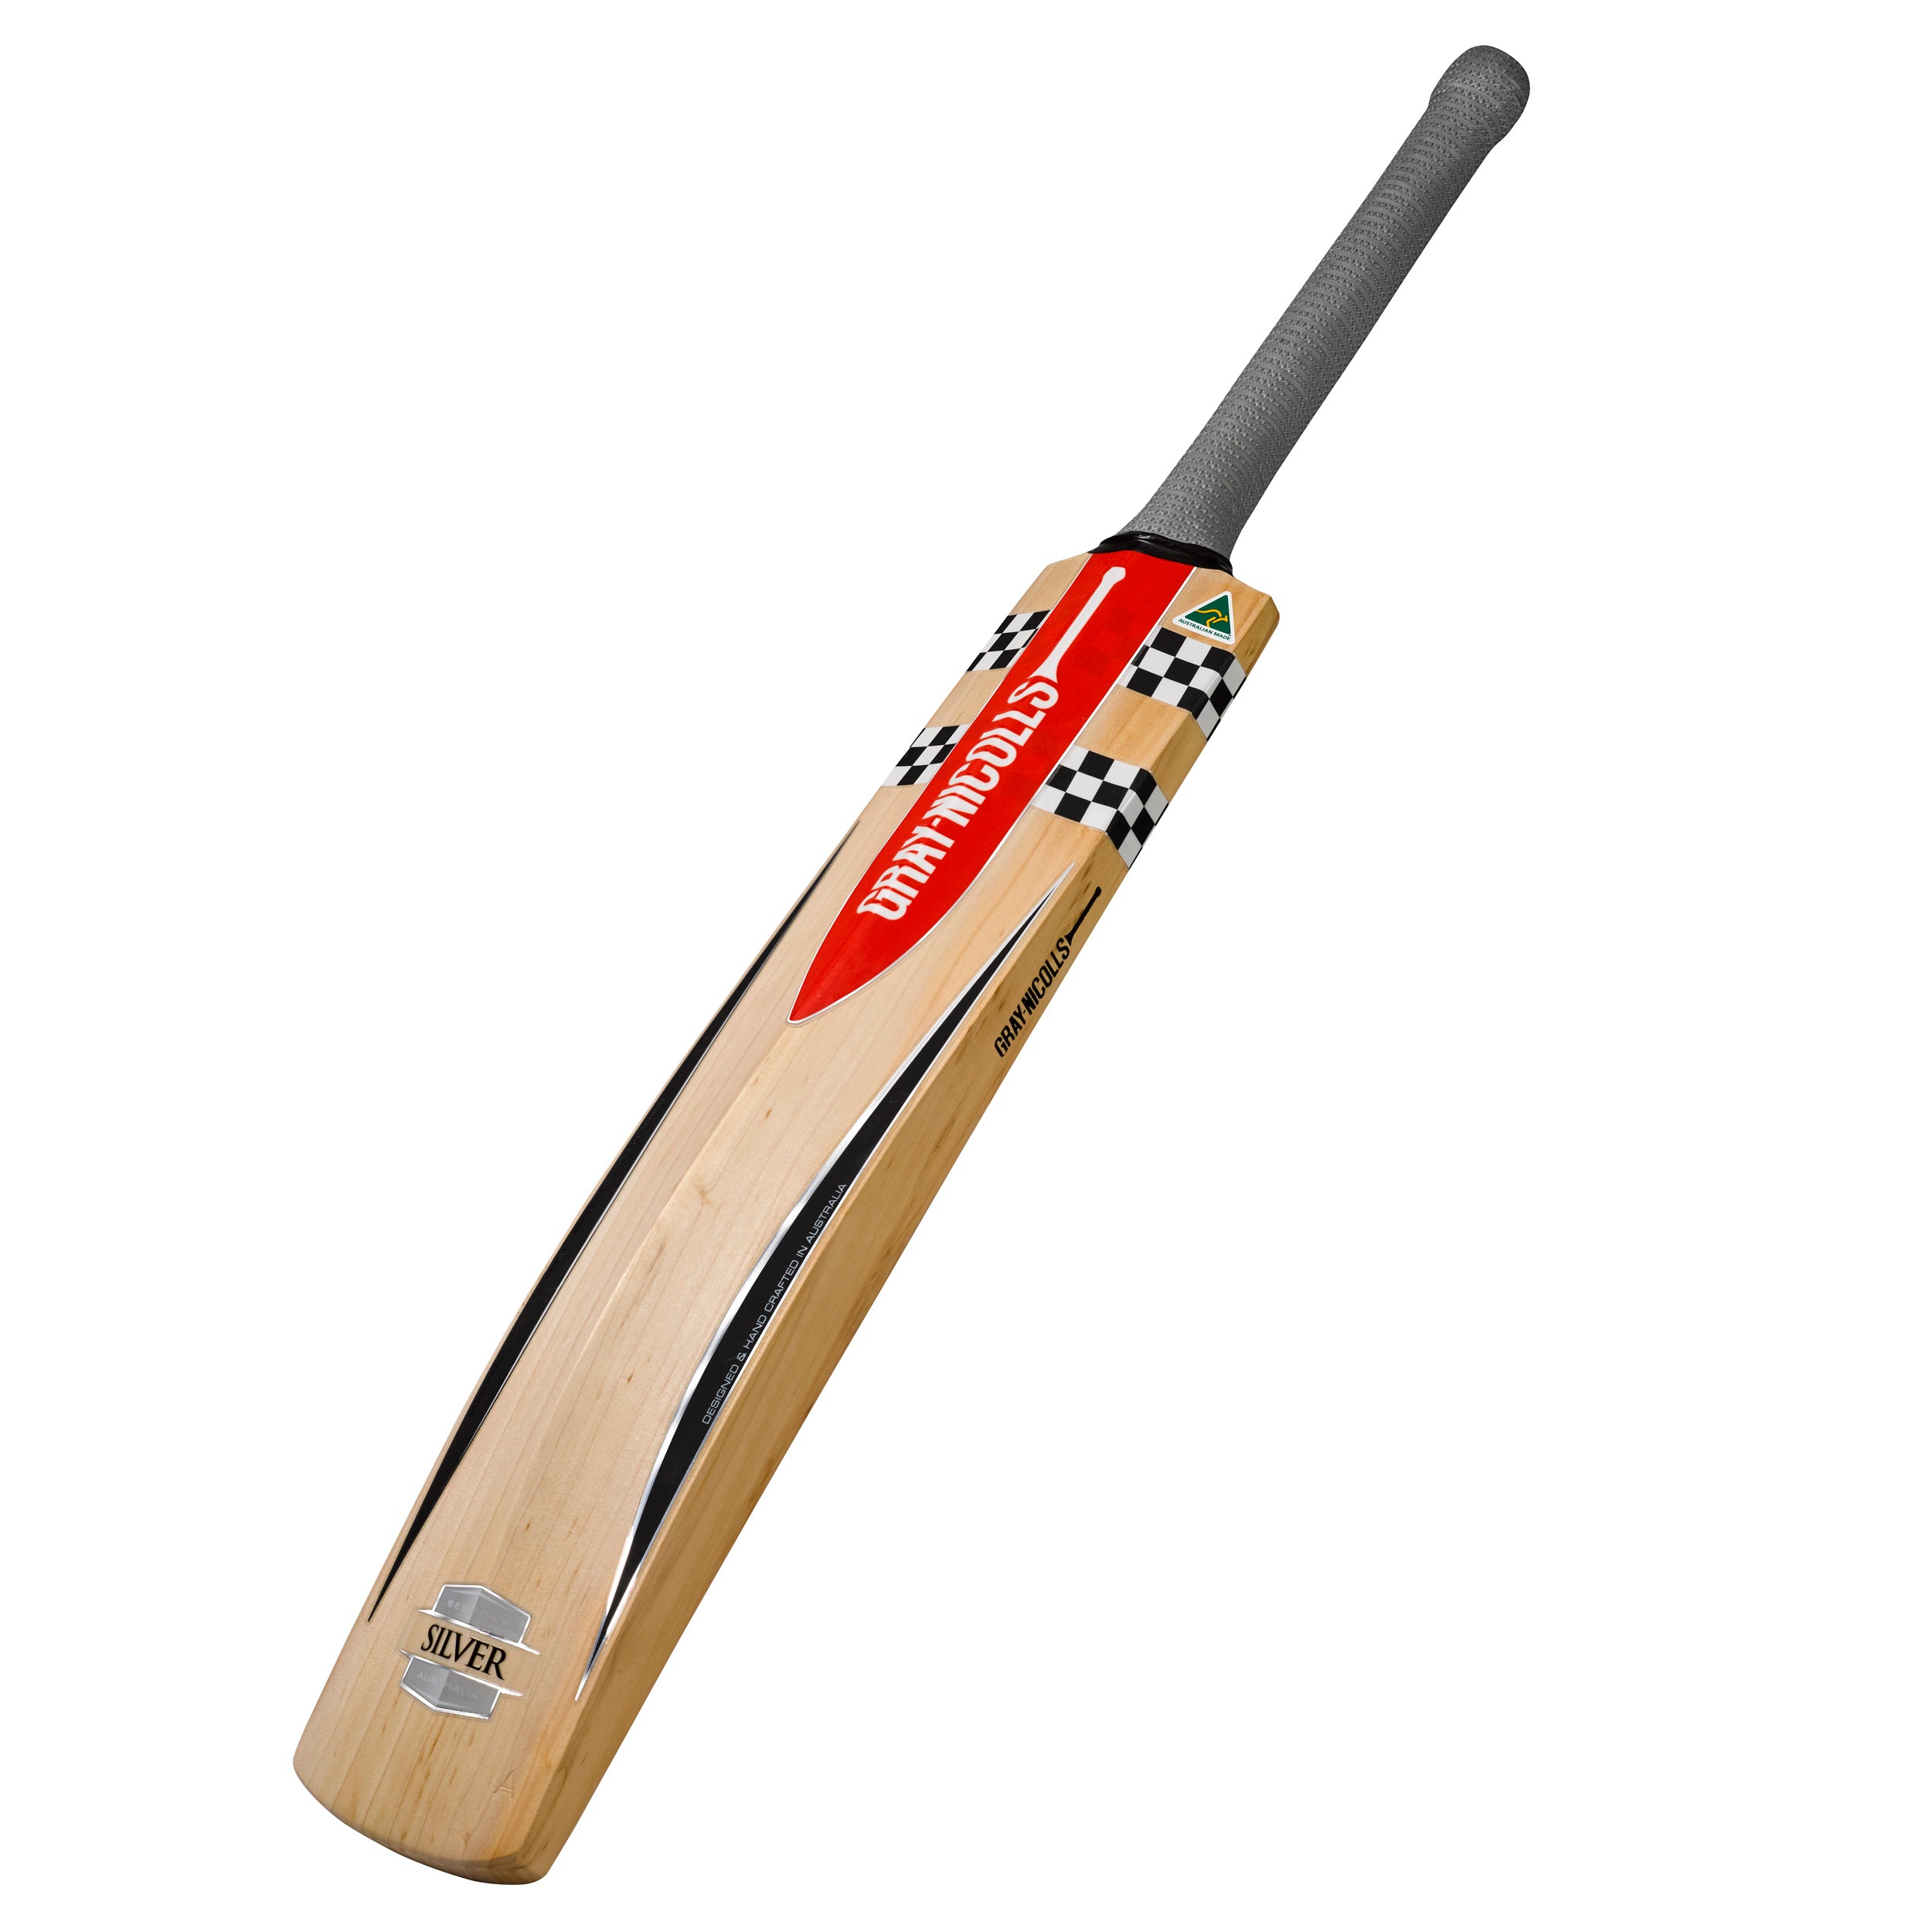 Gray Nicolls Silver Cricket Bat - Senior Long Blade